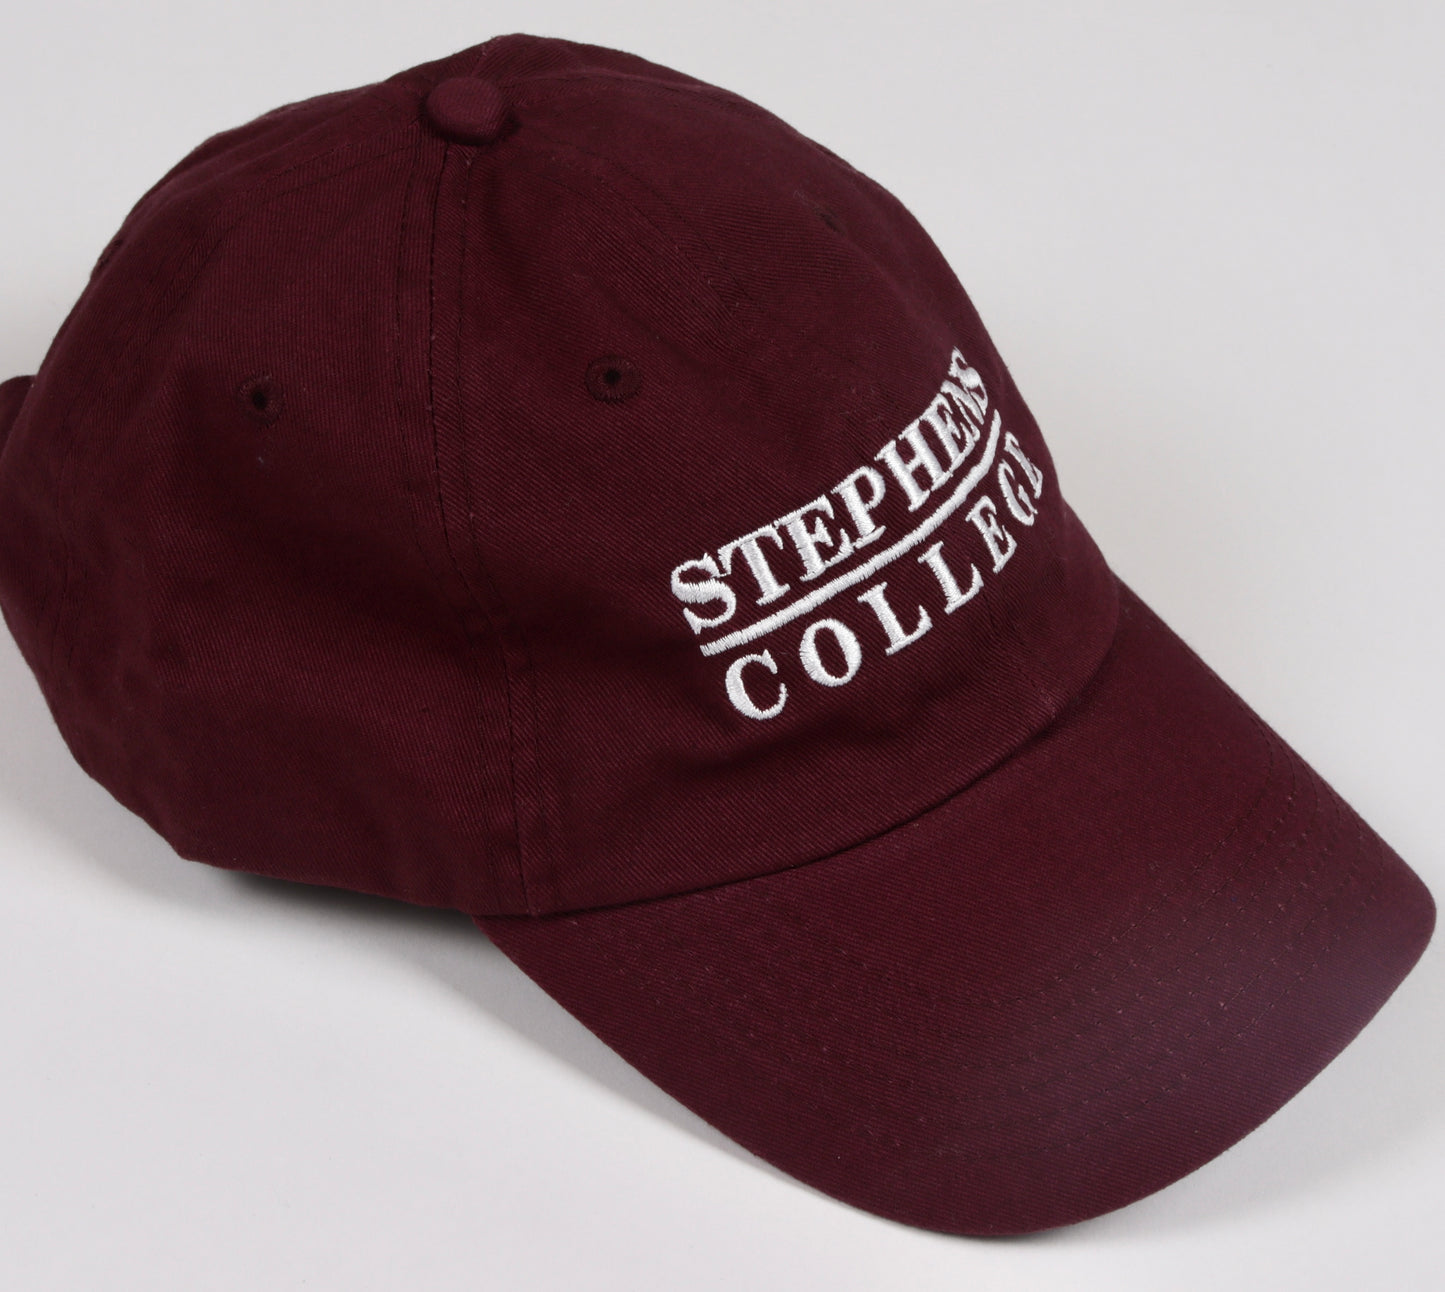 Stephens College Hat